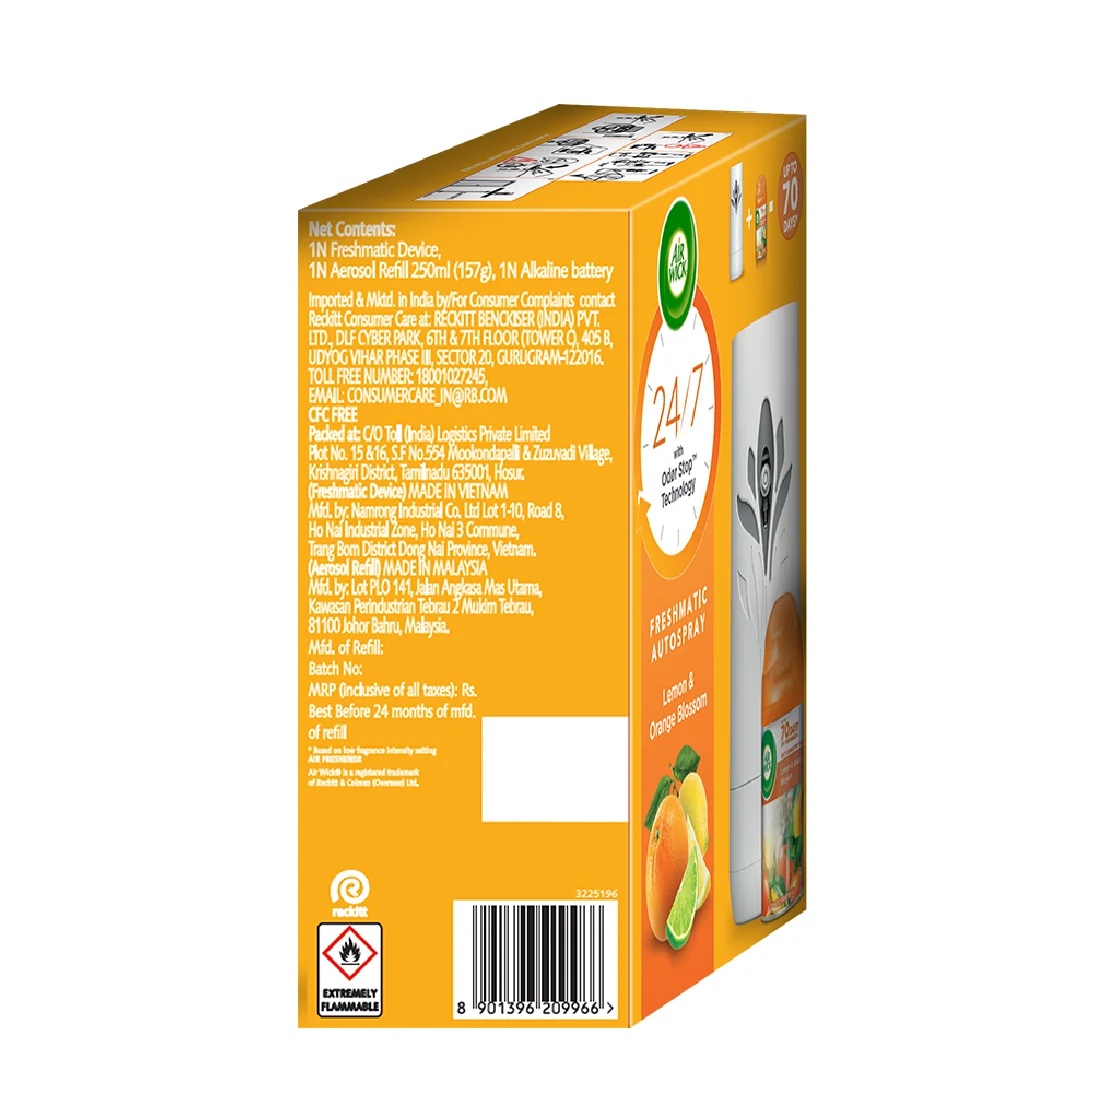 Air Wick Freshmatic Complete, Nagpur Narangi, Lemon & Orange Blossom